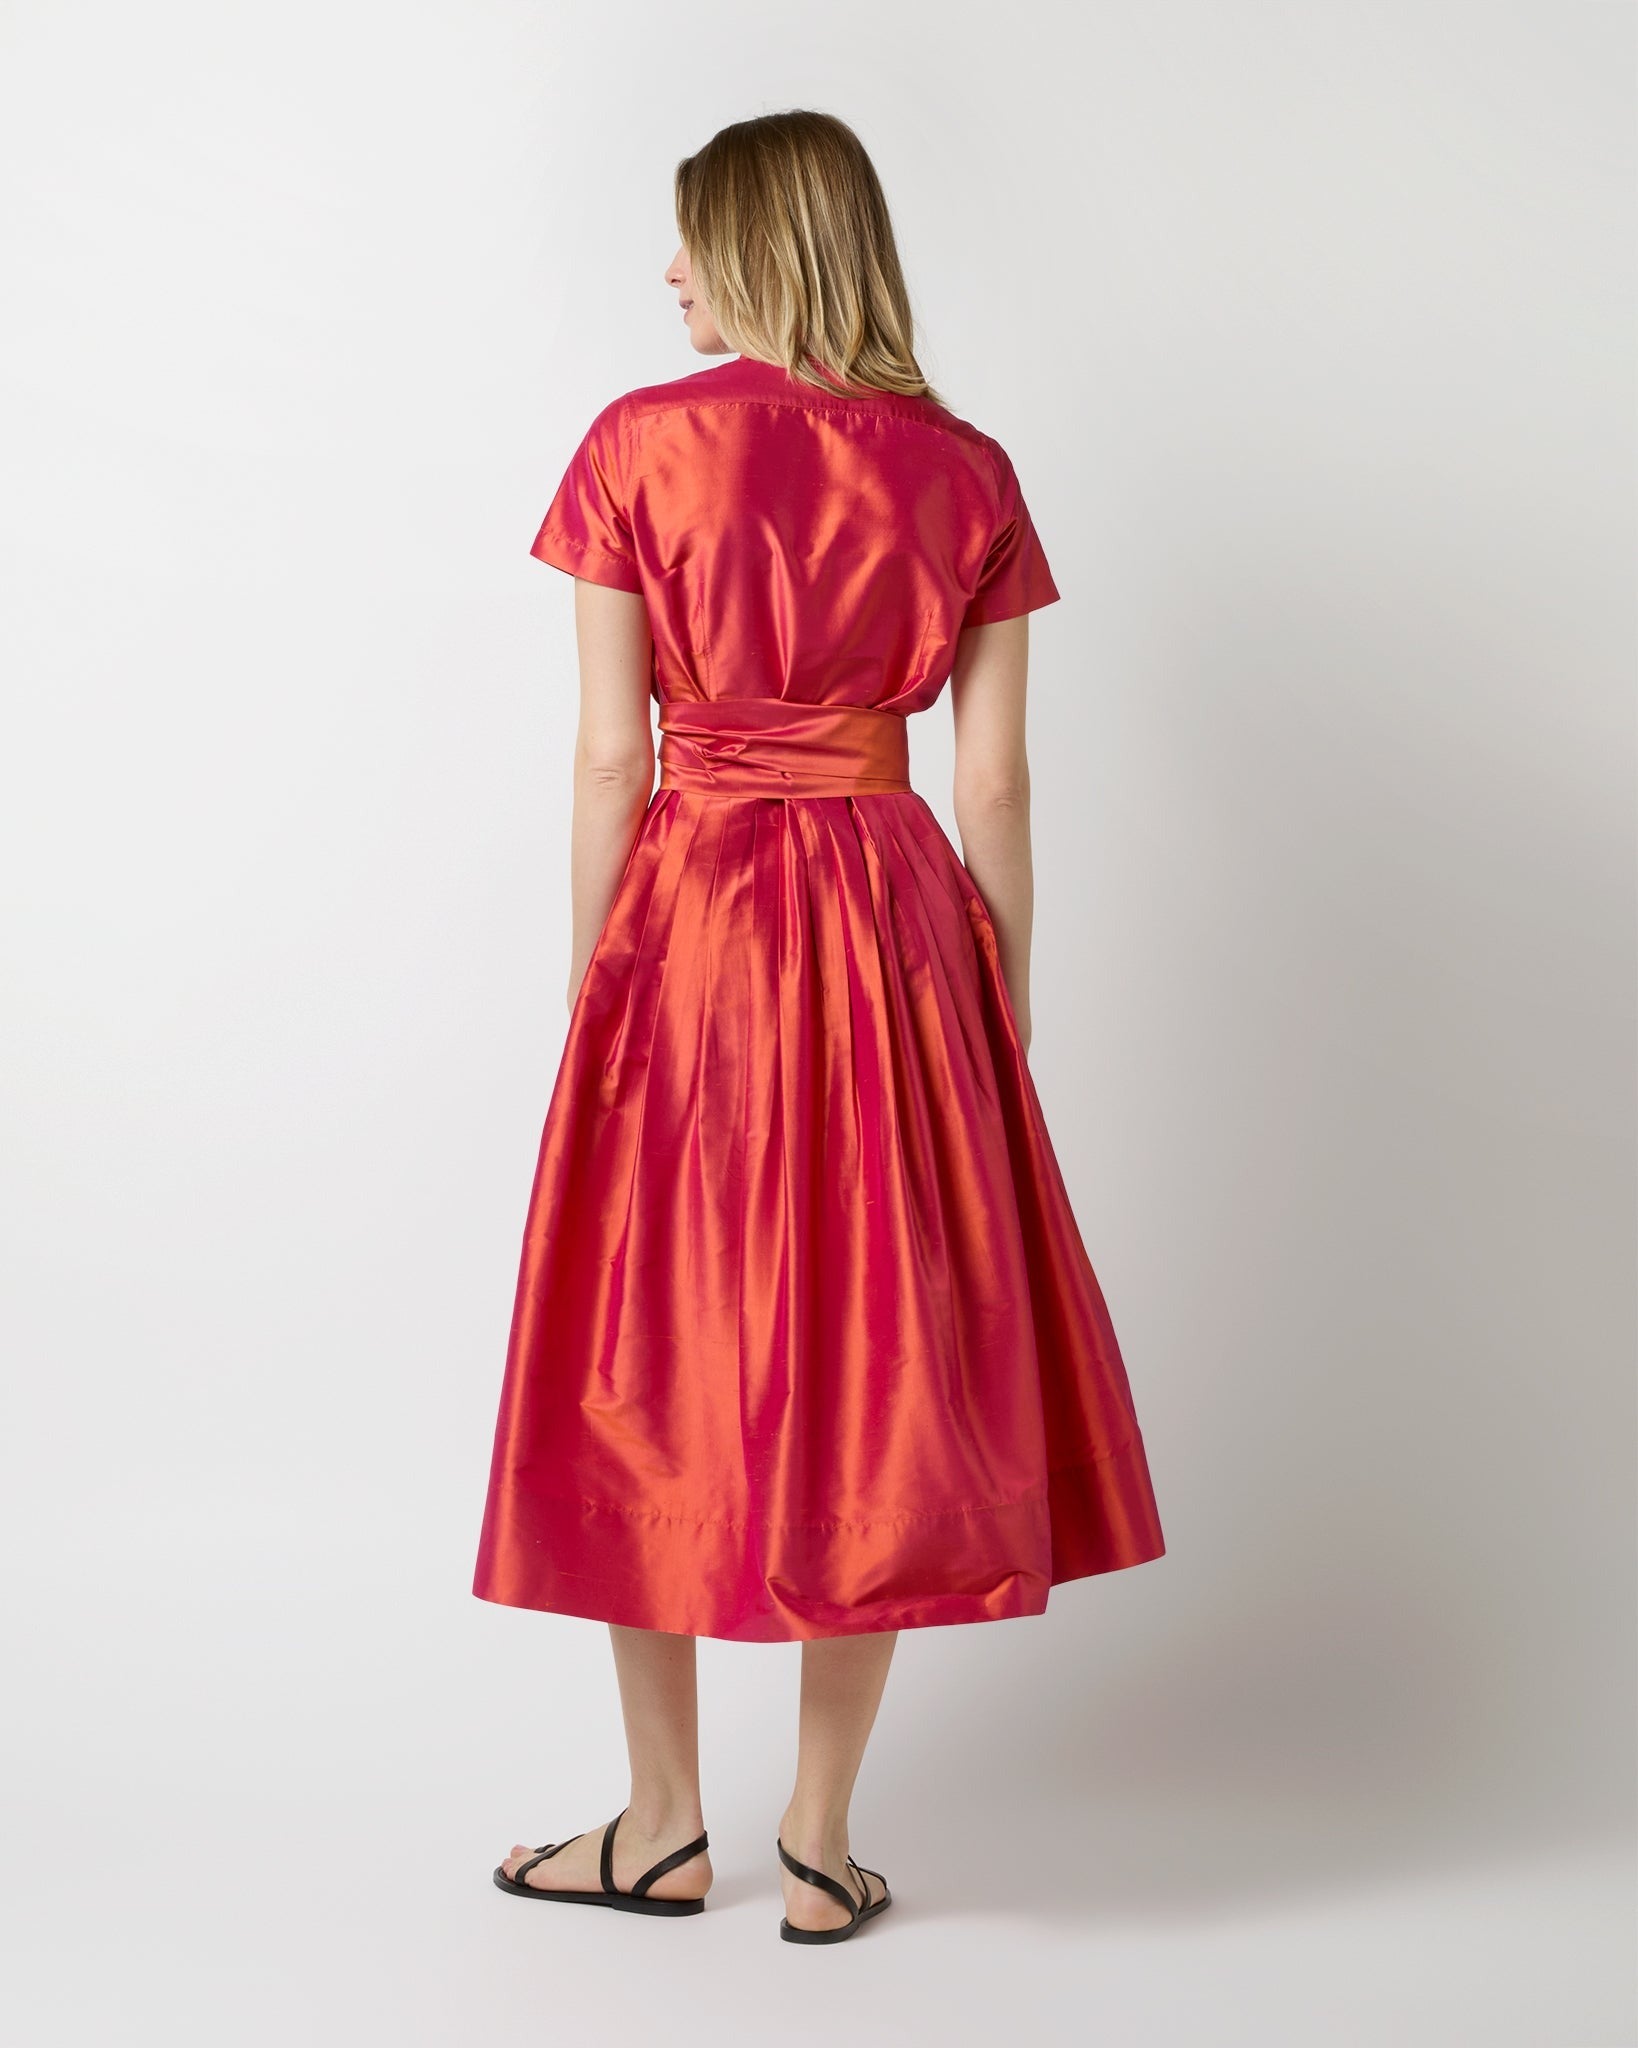 Ann Mashburn Short Sleeve Classic Shirtwaist Dress Tomato Iridescent Silk Shantung